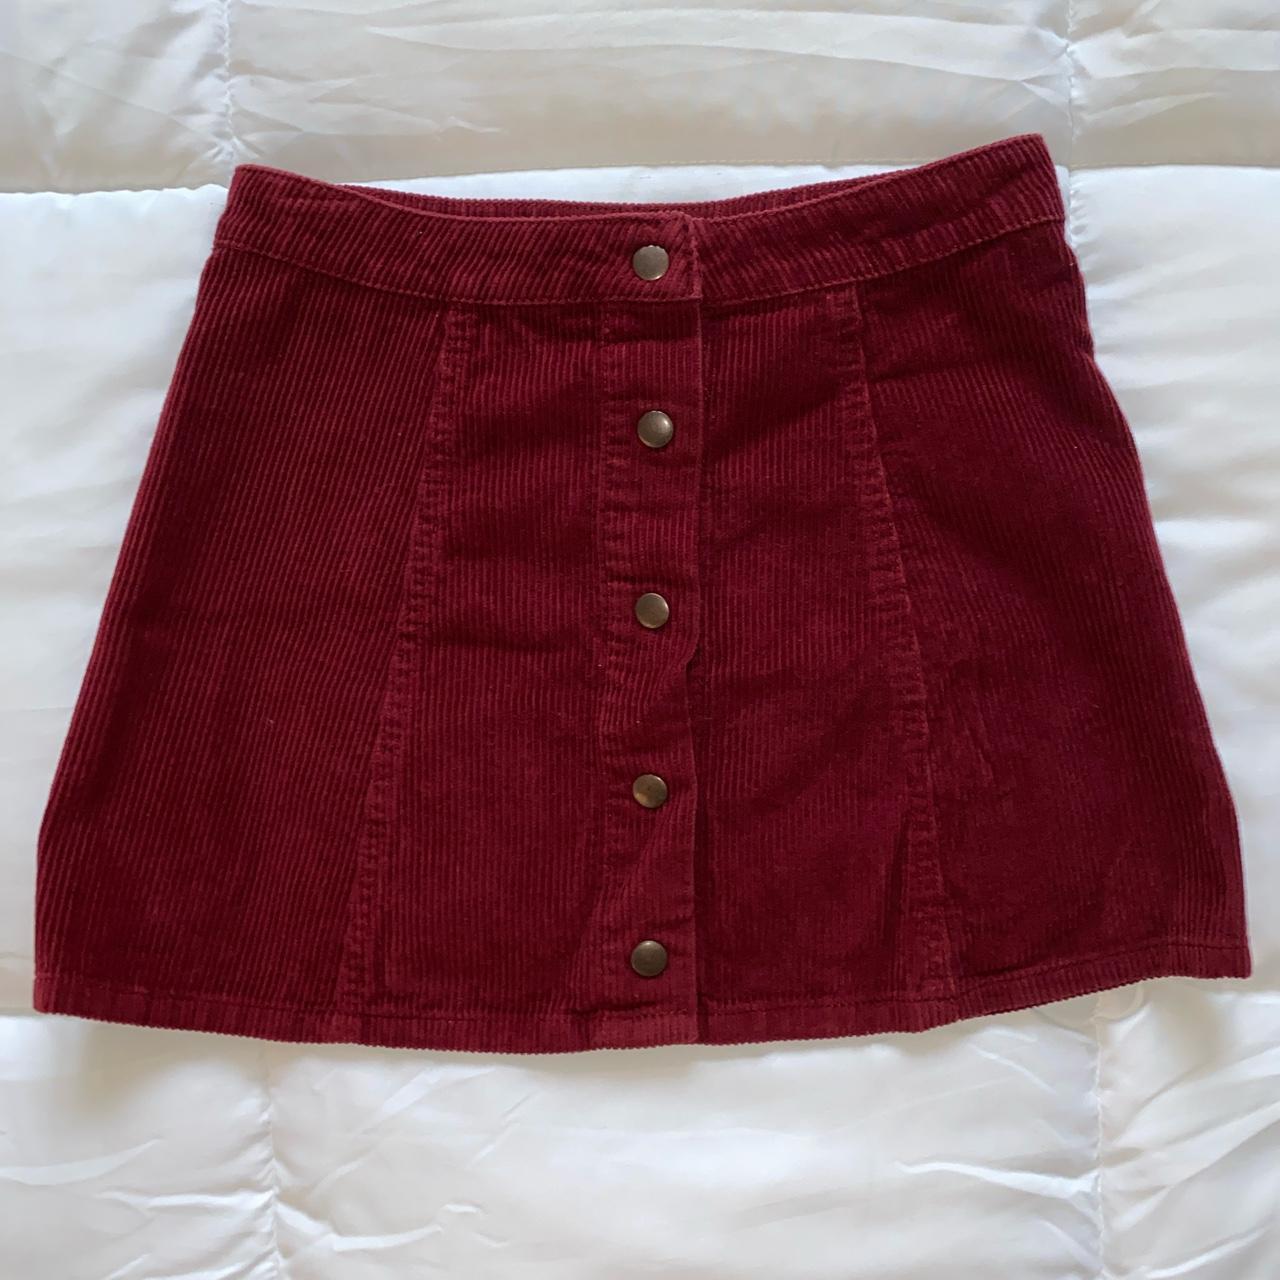 Burgundy Corduroy Mini Skirt Size: 25 The skirt is... - Depop